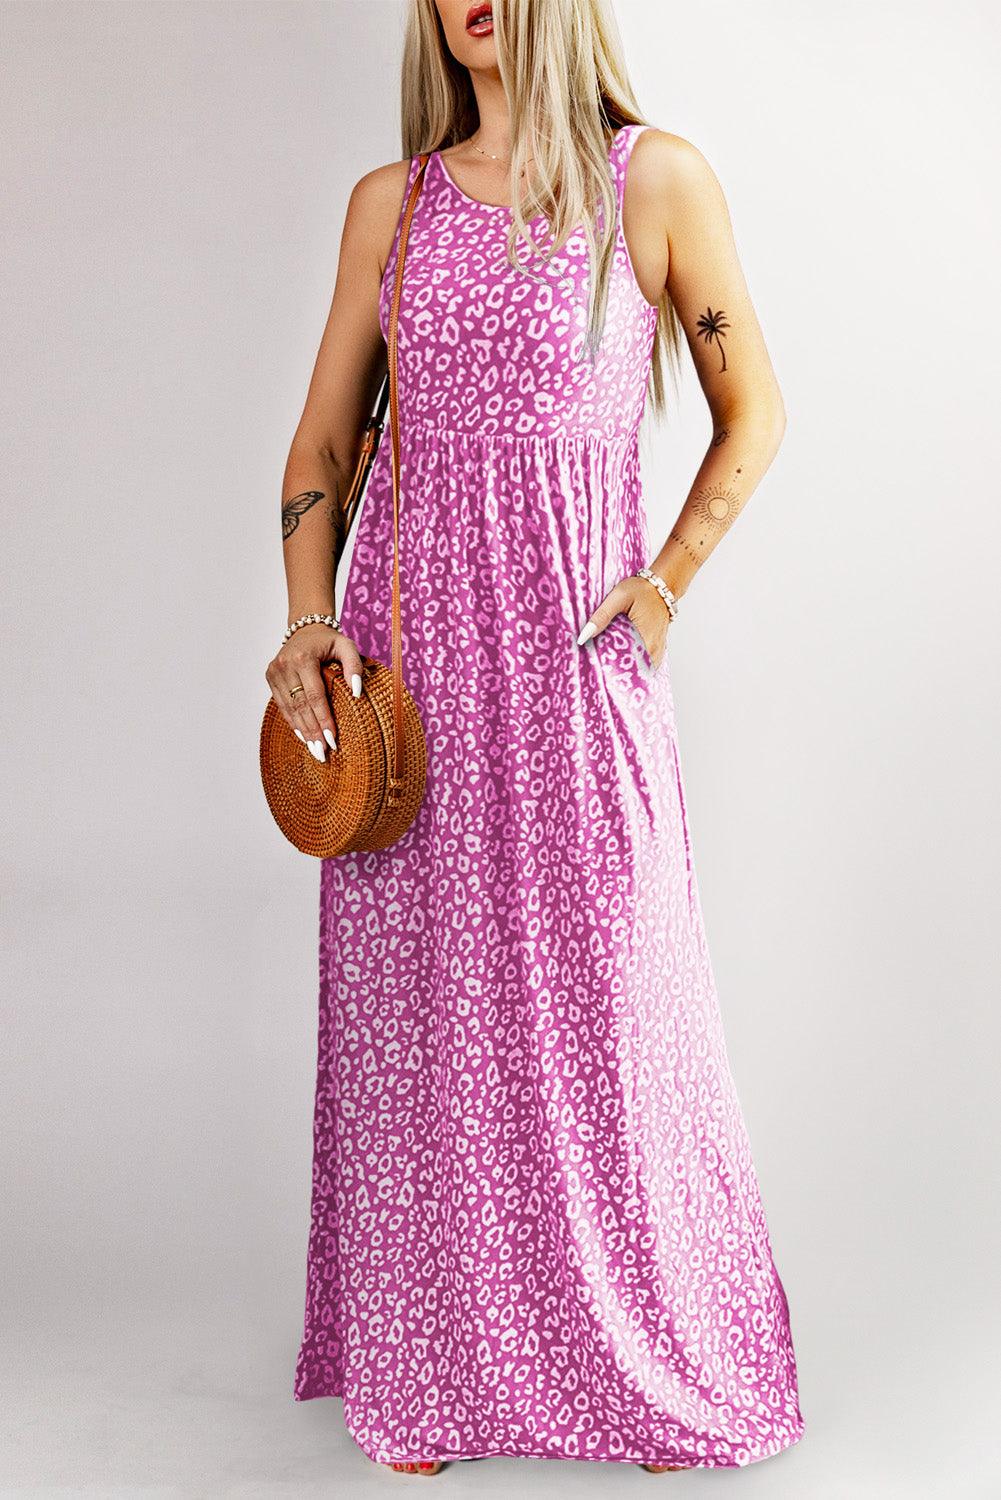 Print Pocketed Sleeveless Pink Maxi Dress Style Sundress